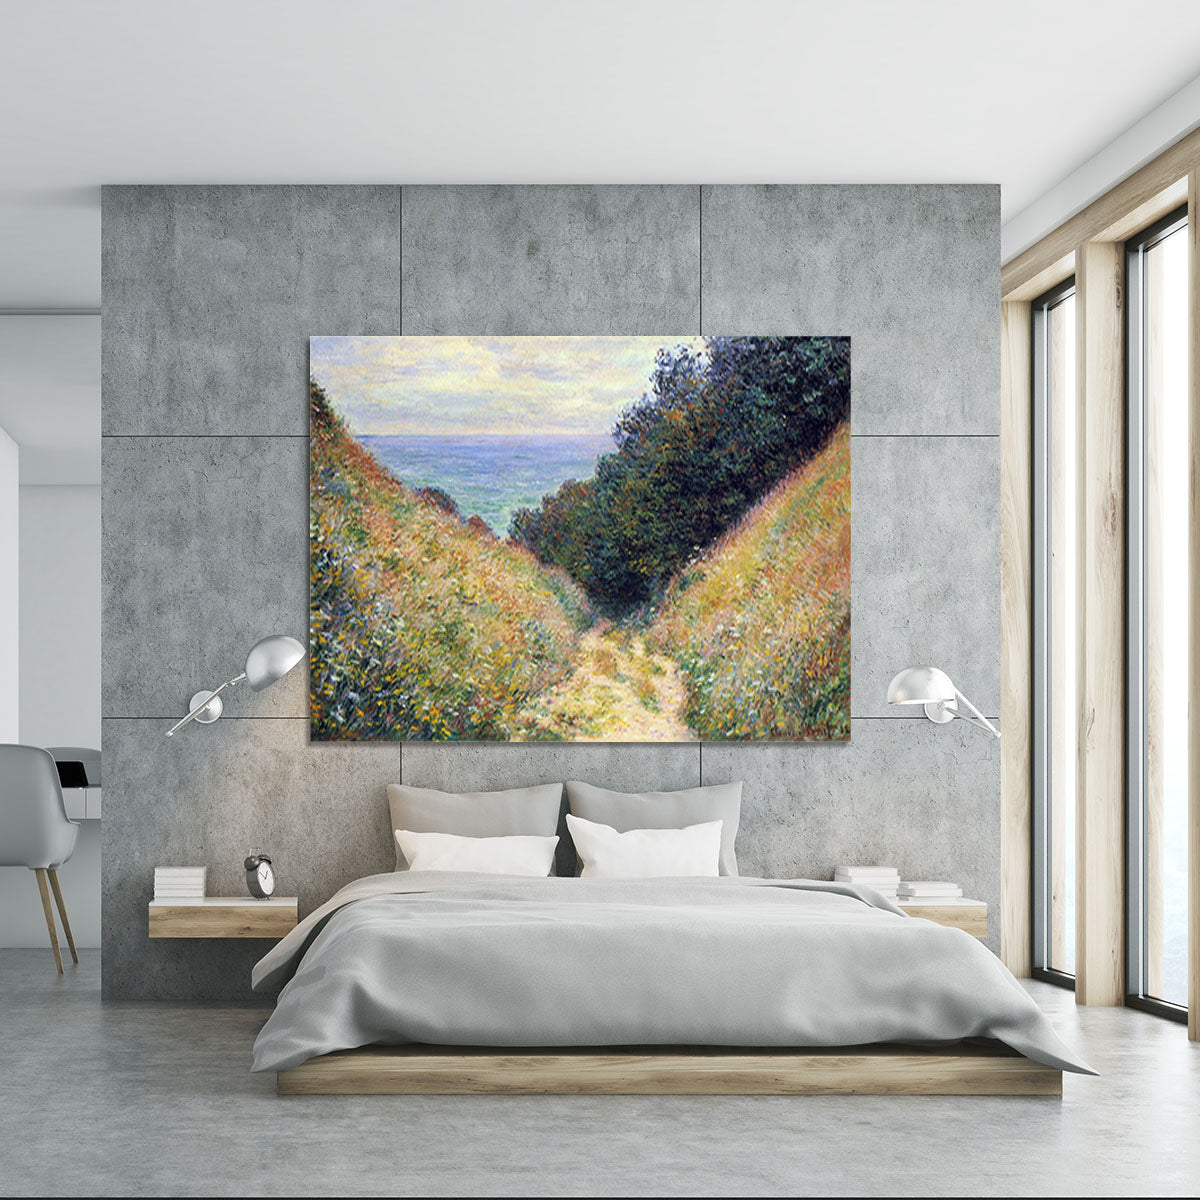 Pourville 1 by Monet Canvas Print or Poster - Canvas Art Rocks - 5